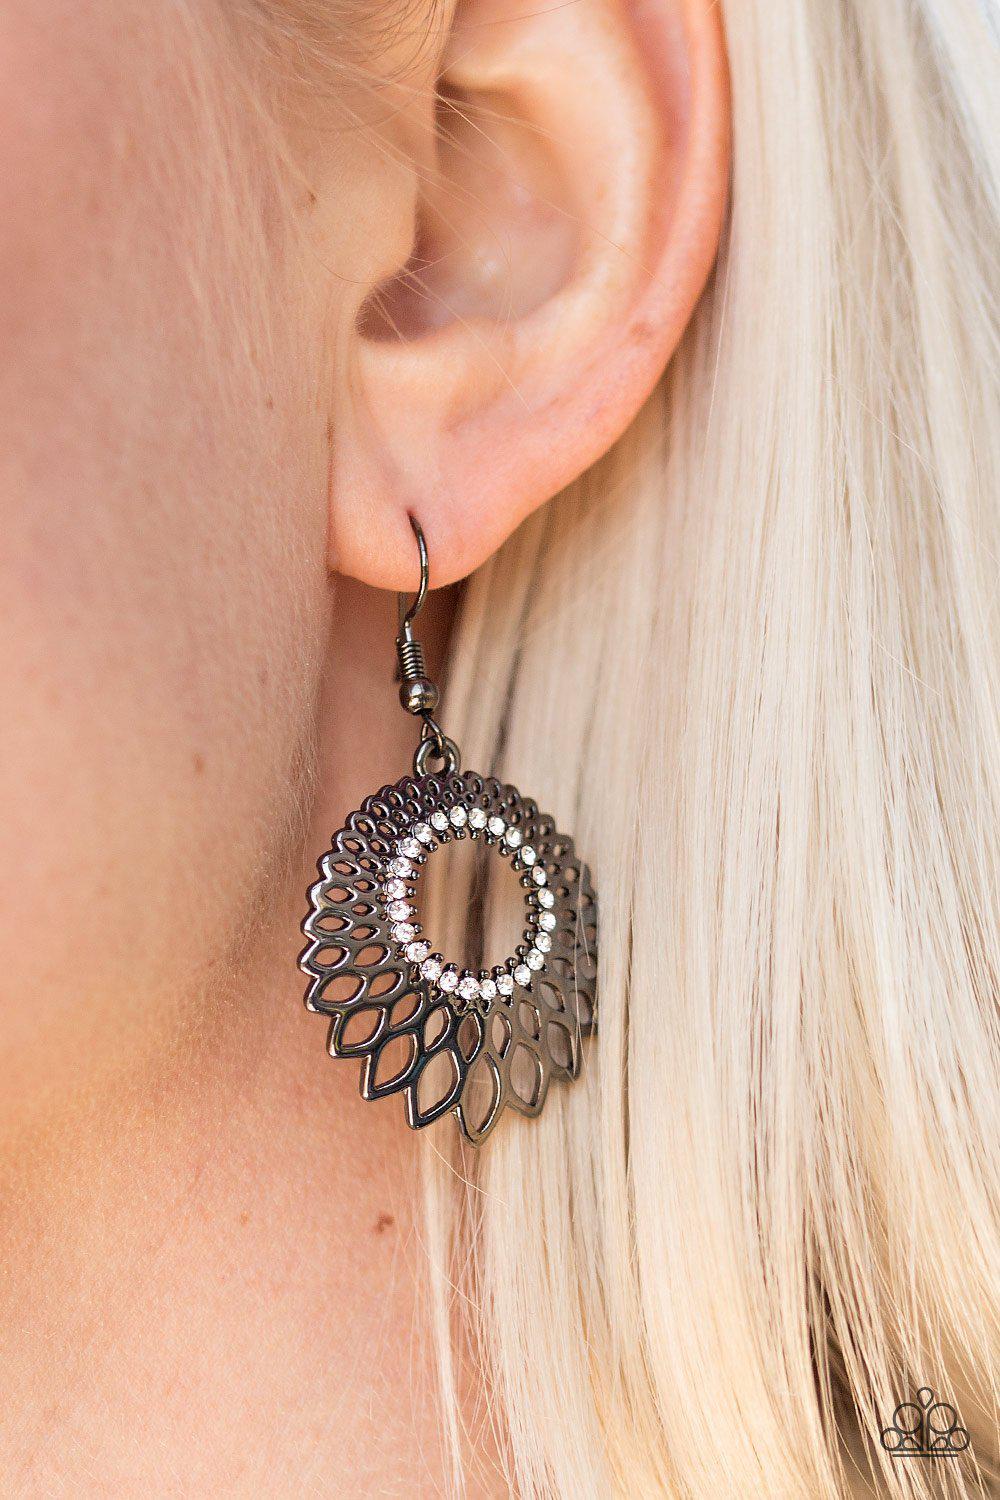 You Heard The GLAM! Gunmetal Black and White Rhinestone Earrings - Paparazzi Accessories- model - CarasShop.com - $5 Jewelry by Cara Jewels